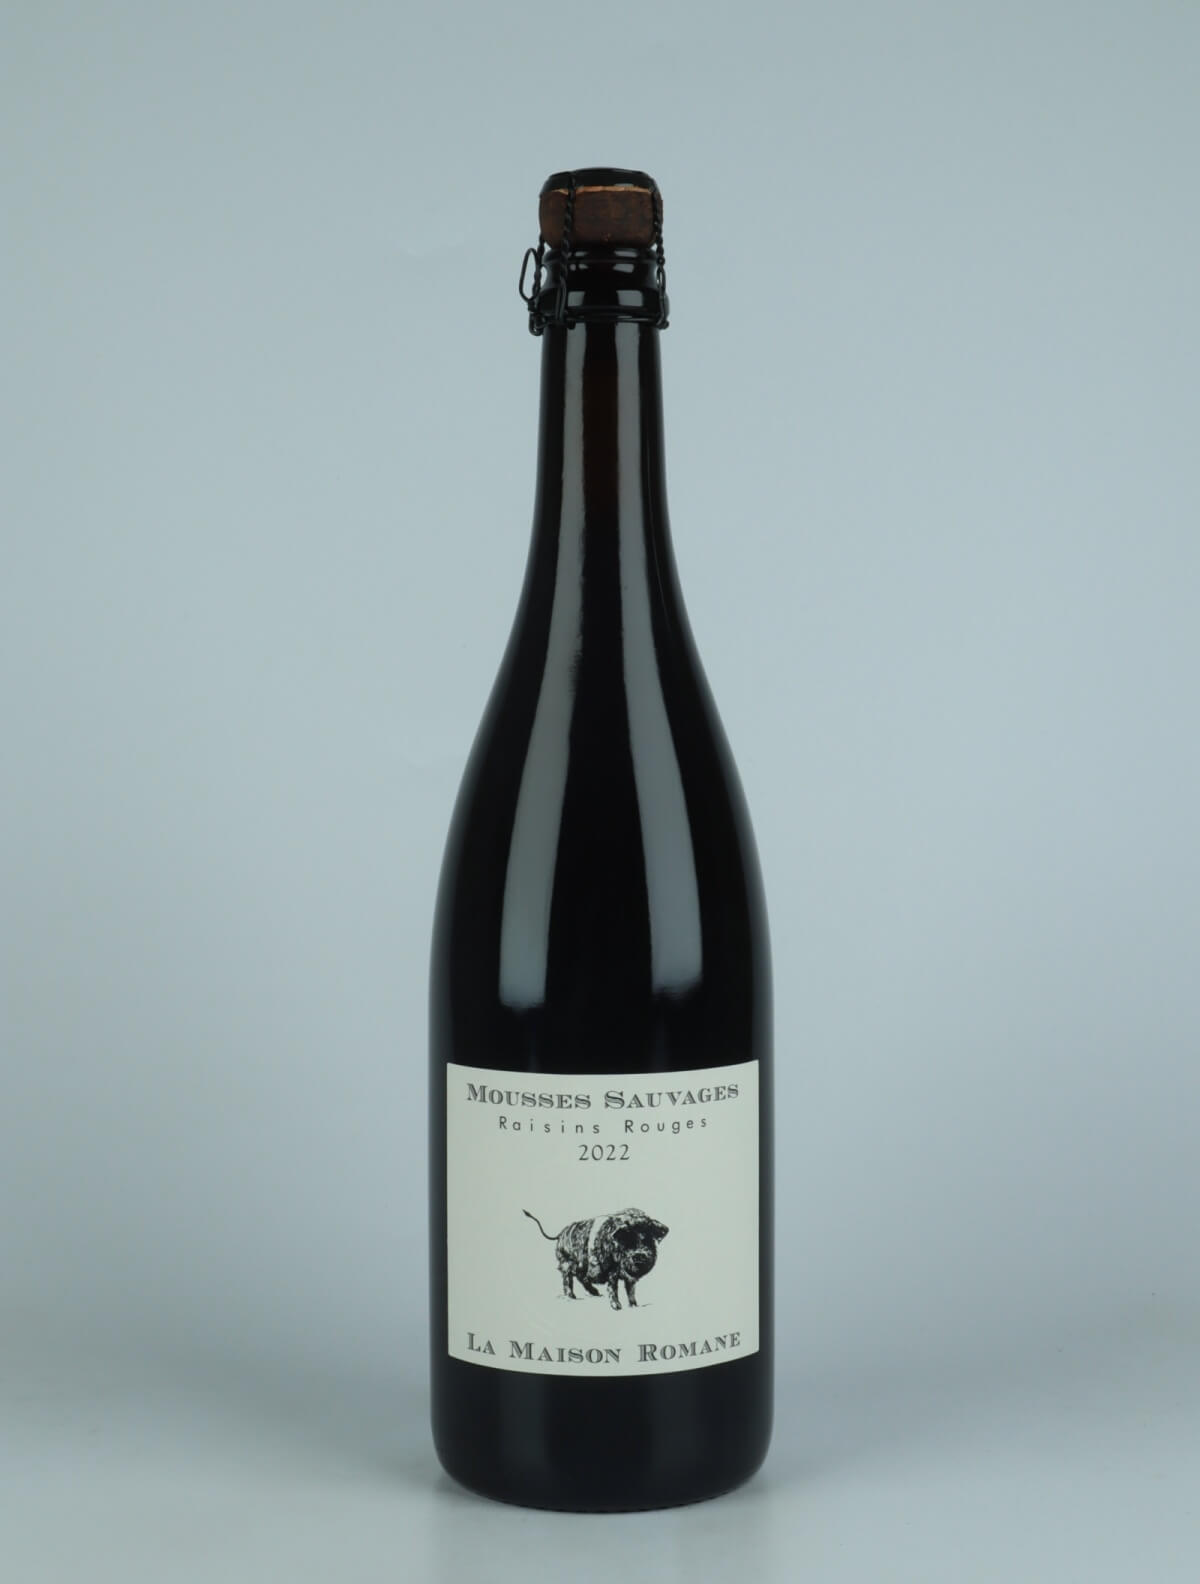 A bottle 2022 Mousses Sauvages Raisins Rouges Beer from La Maison Romane, Burgundy in France